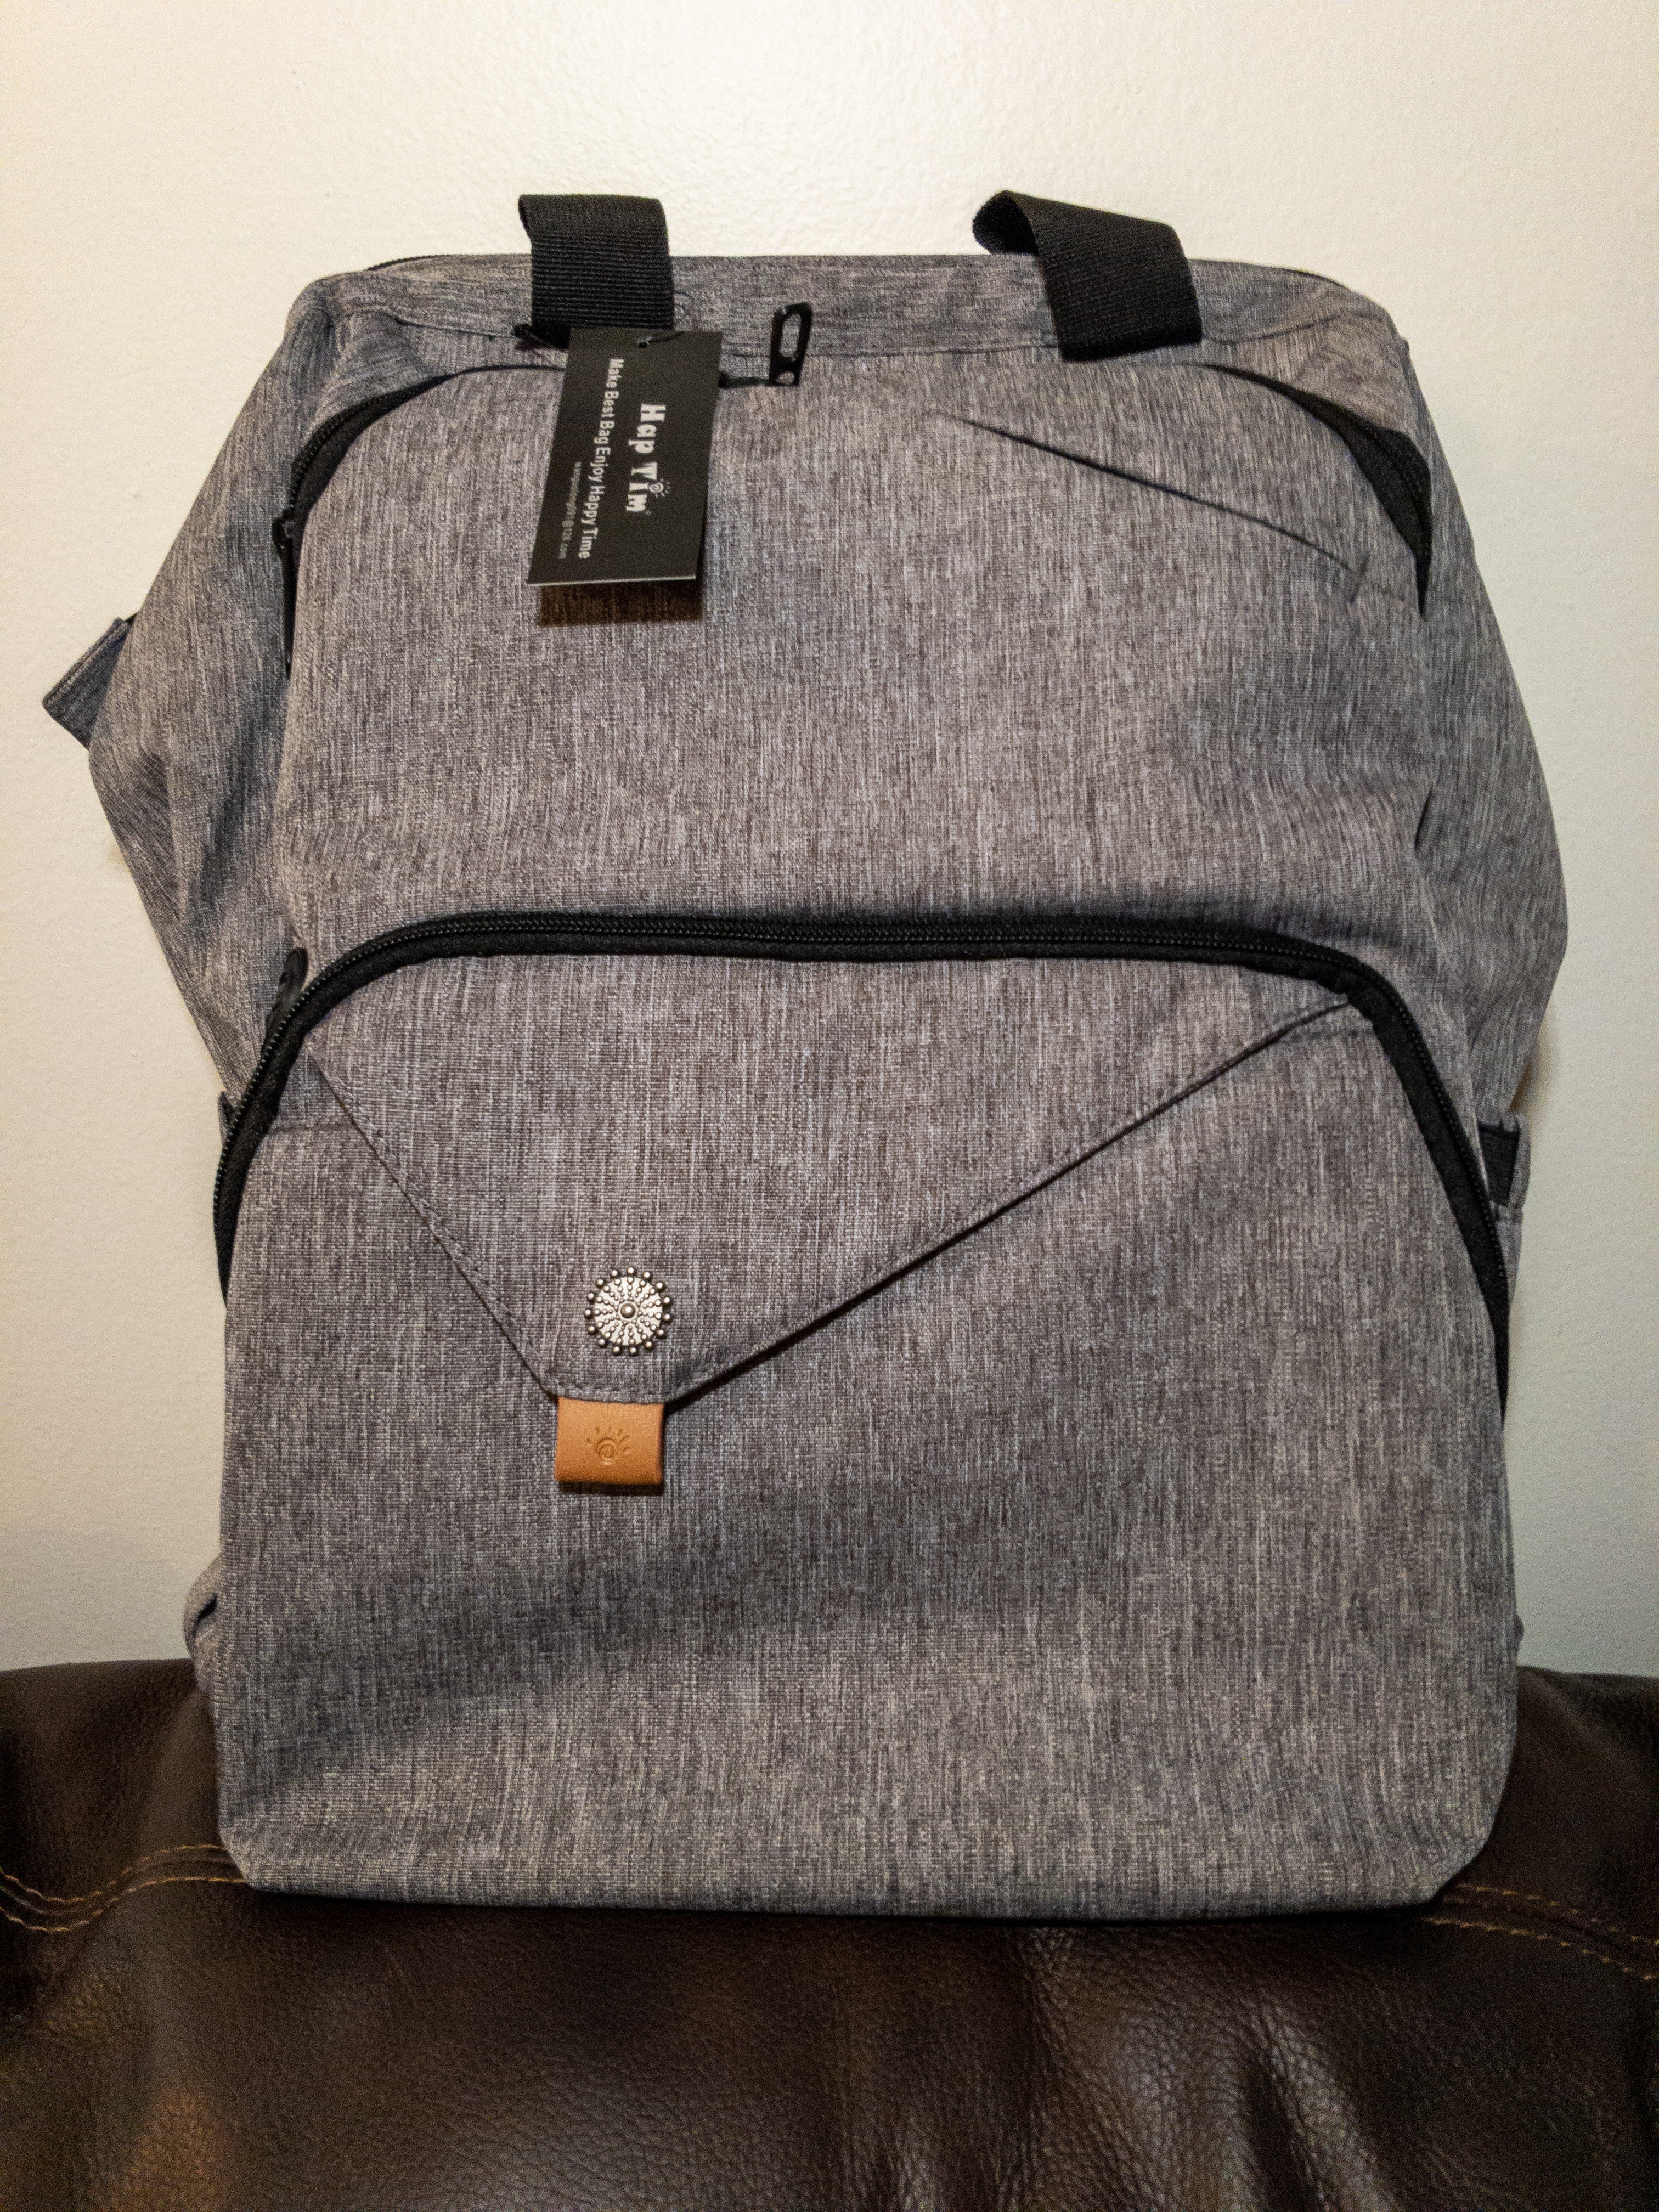 hap-tim-laptop-backpack-review-1.JPG